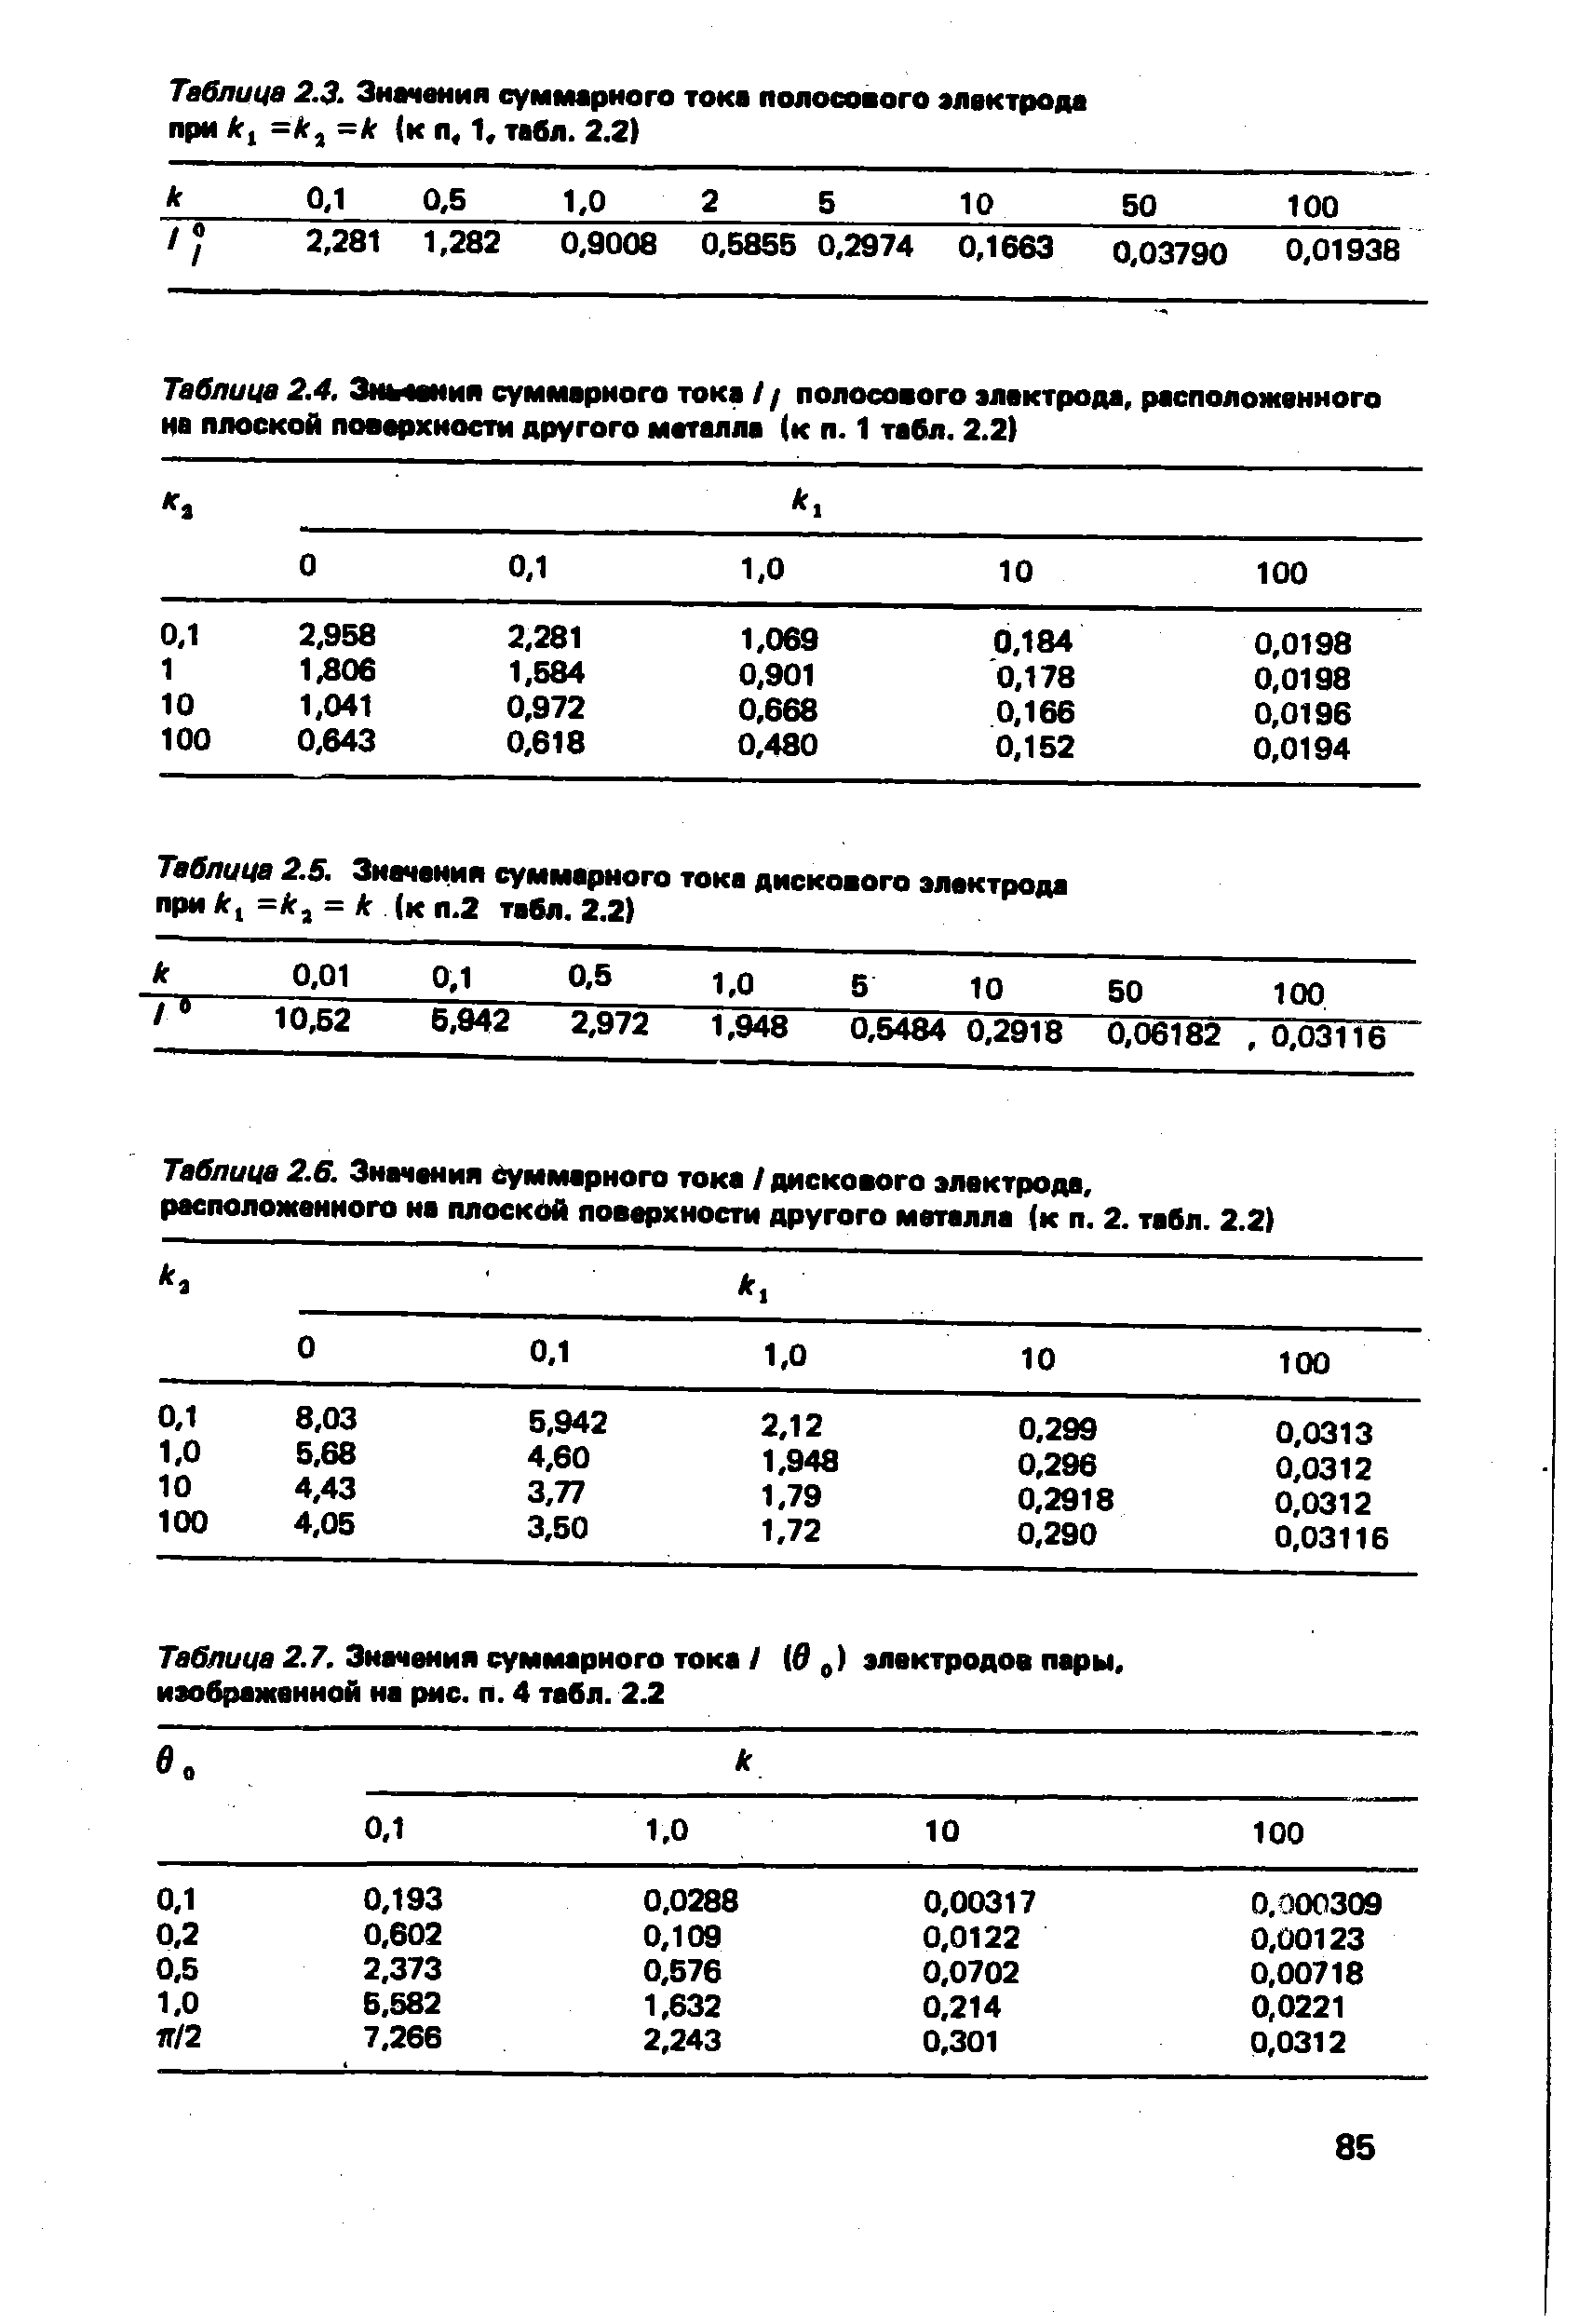 Таблица 2.S. Значения суммарного тока дискового электрода при /г, =, = (к п.2 табл. 2.2) 
